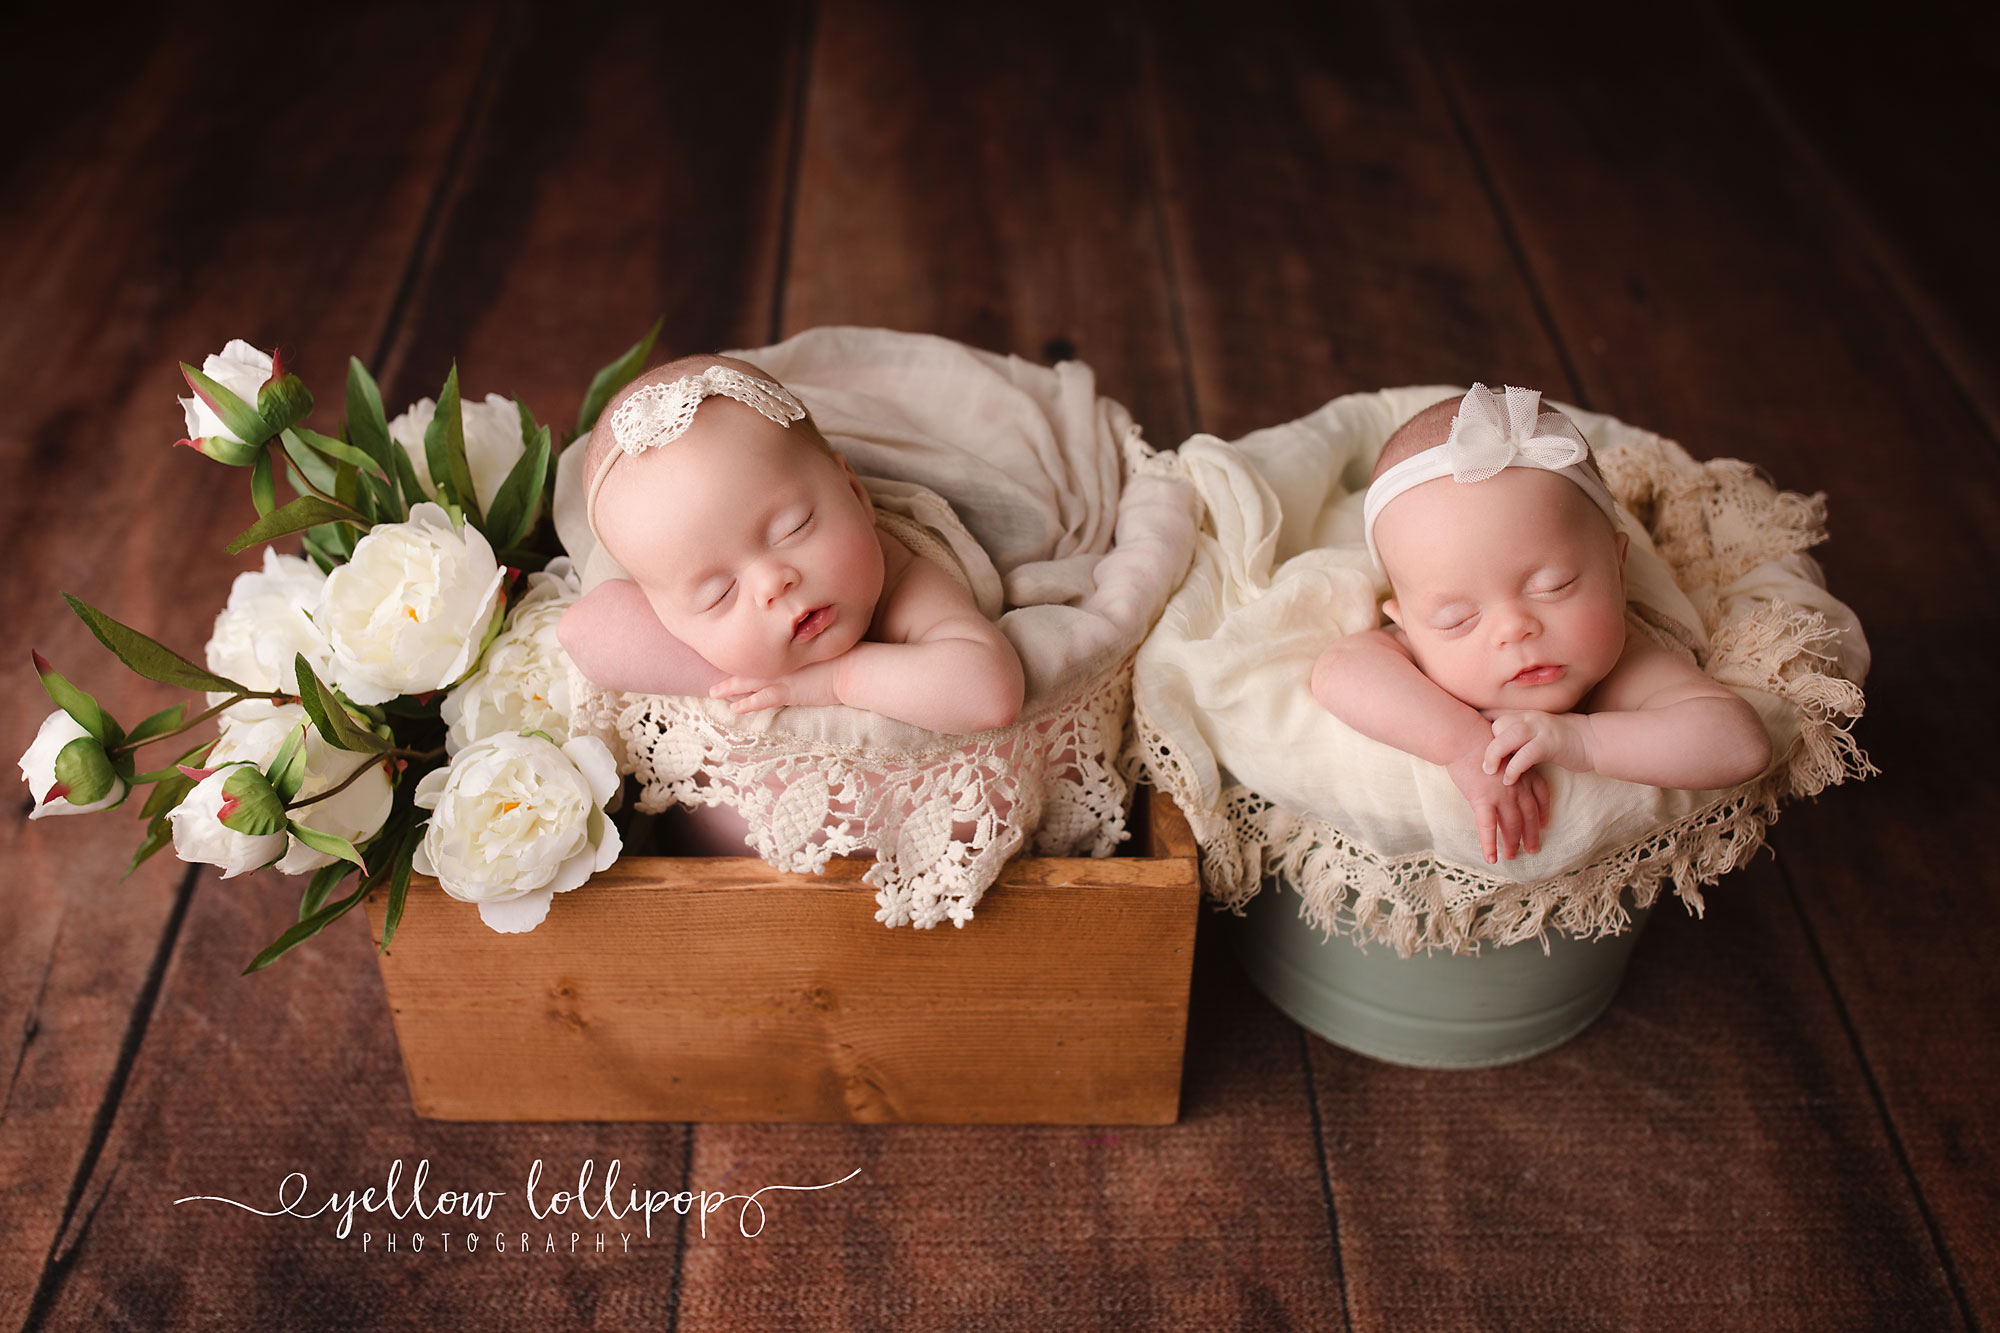 Best Newborn Photography Props babies twins sleeping in a bucket